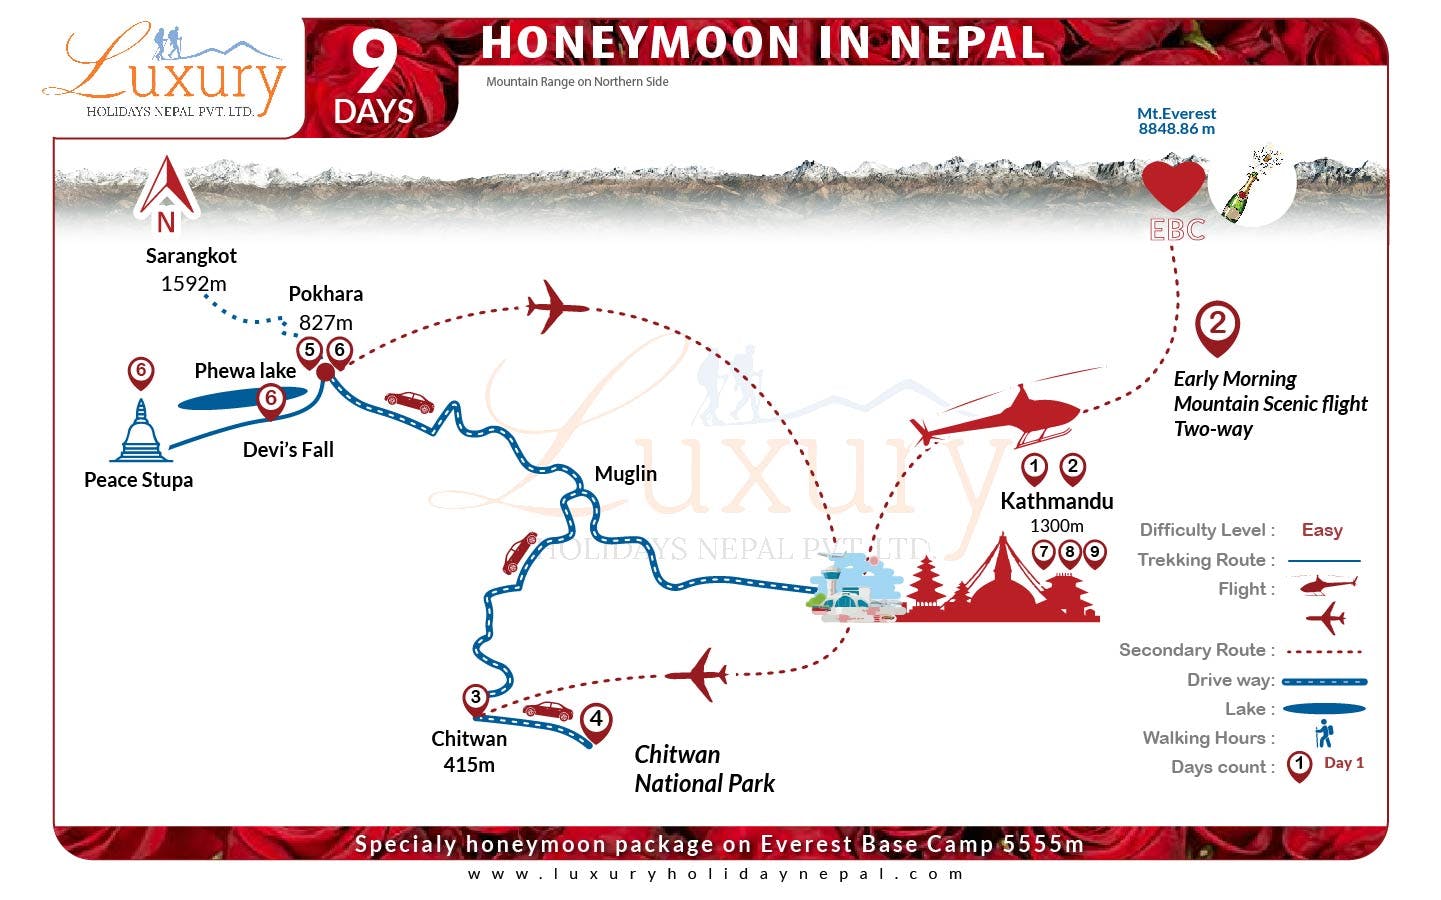 Honeymoon in NepalMap